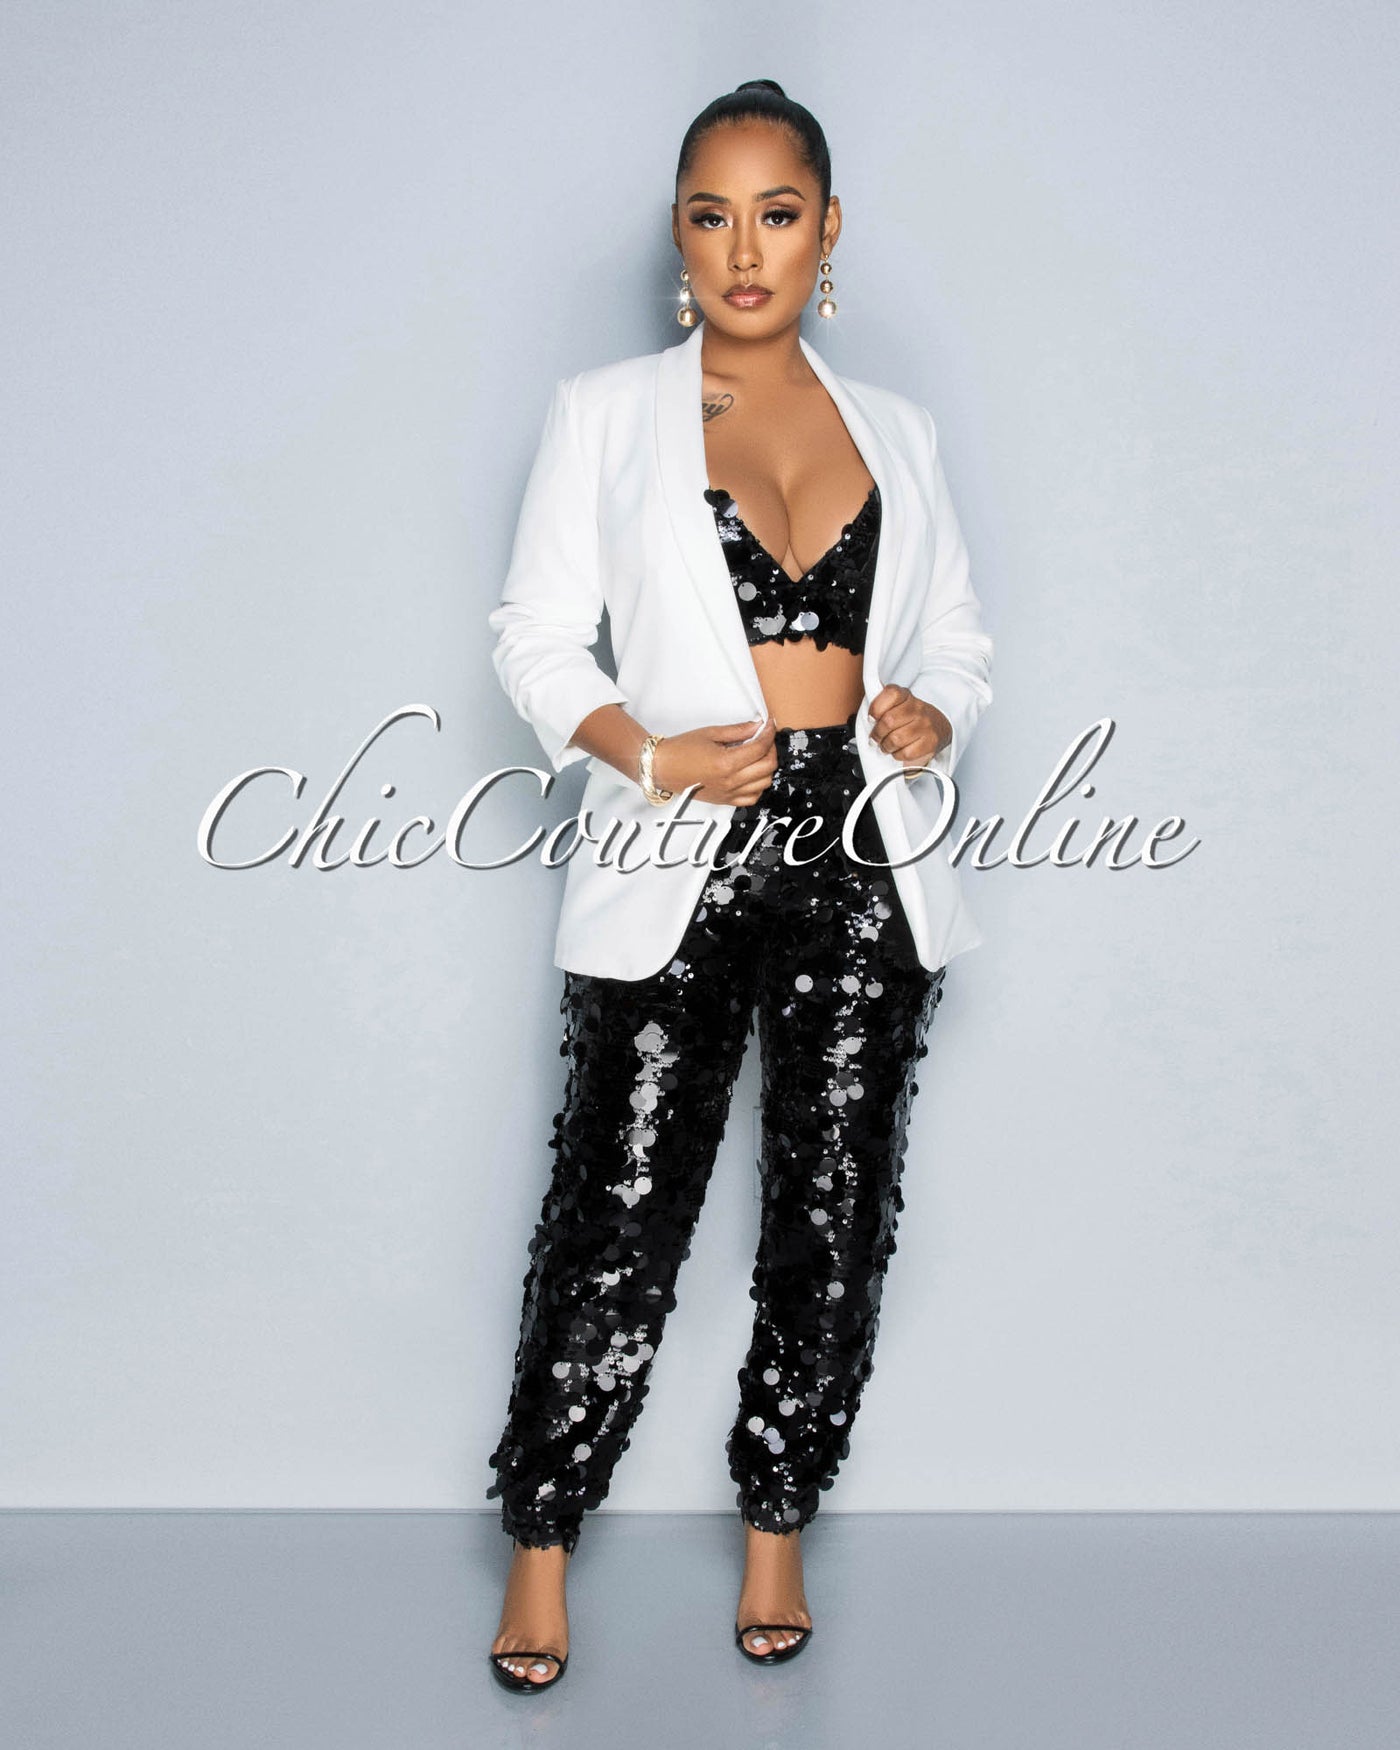 Bouser Black Iridescent Sequins Crop Top & Pants Set